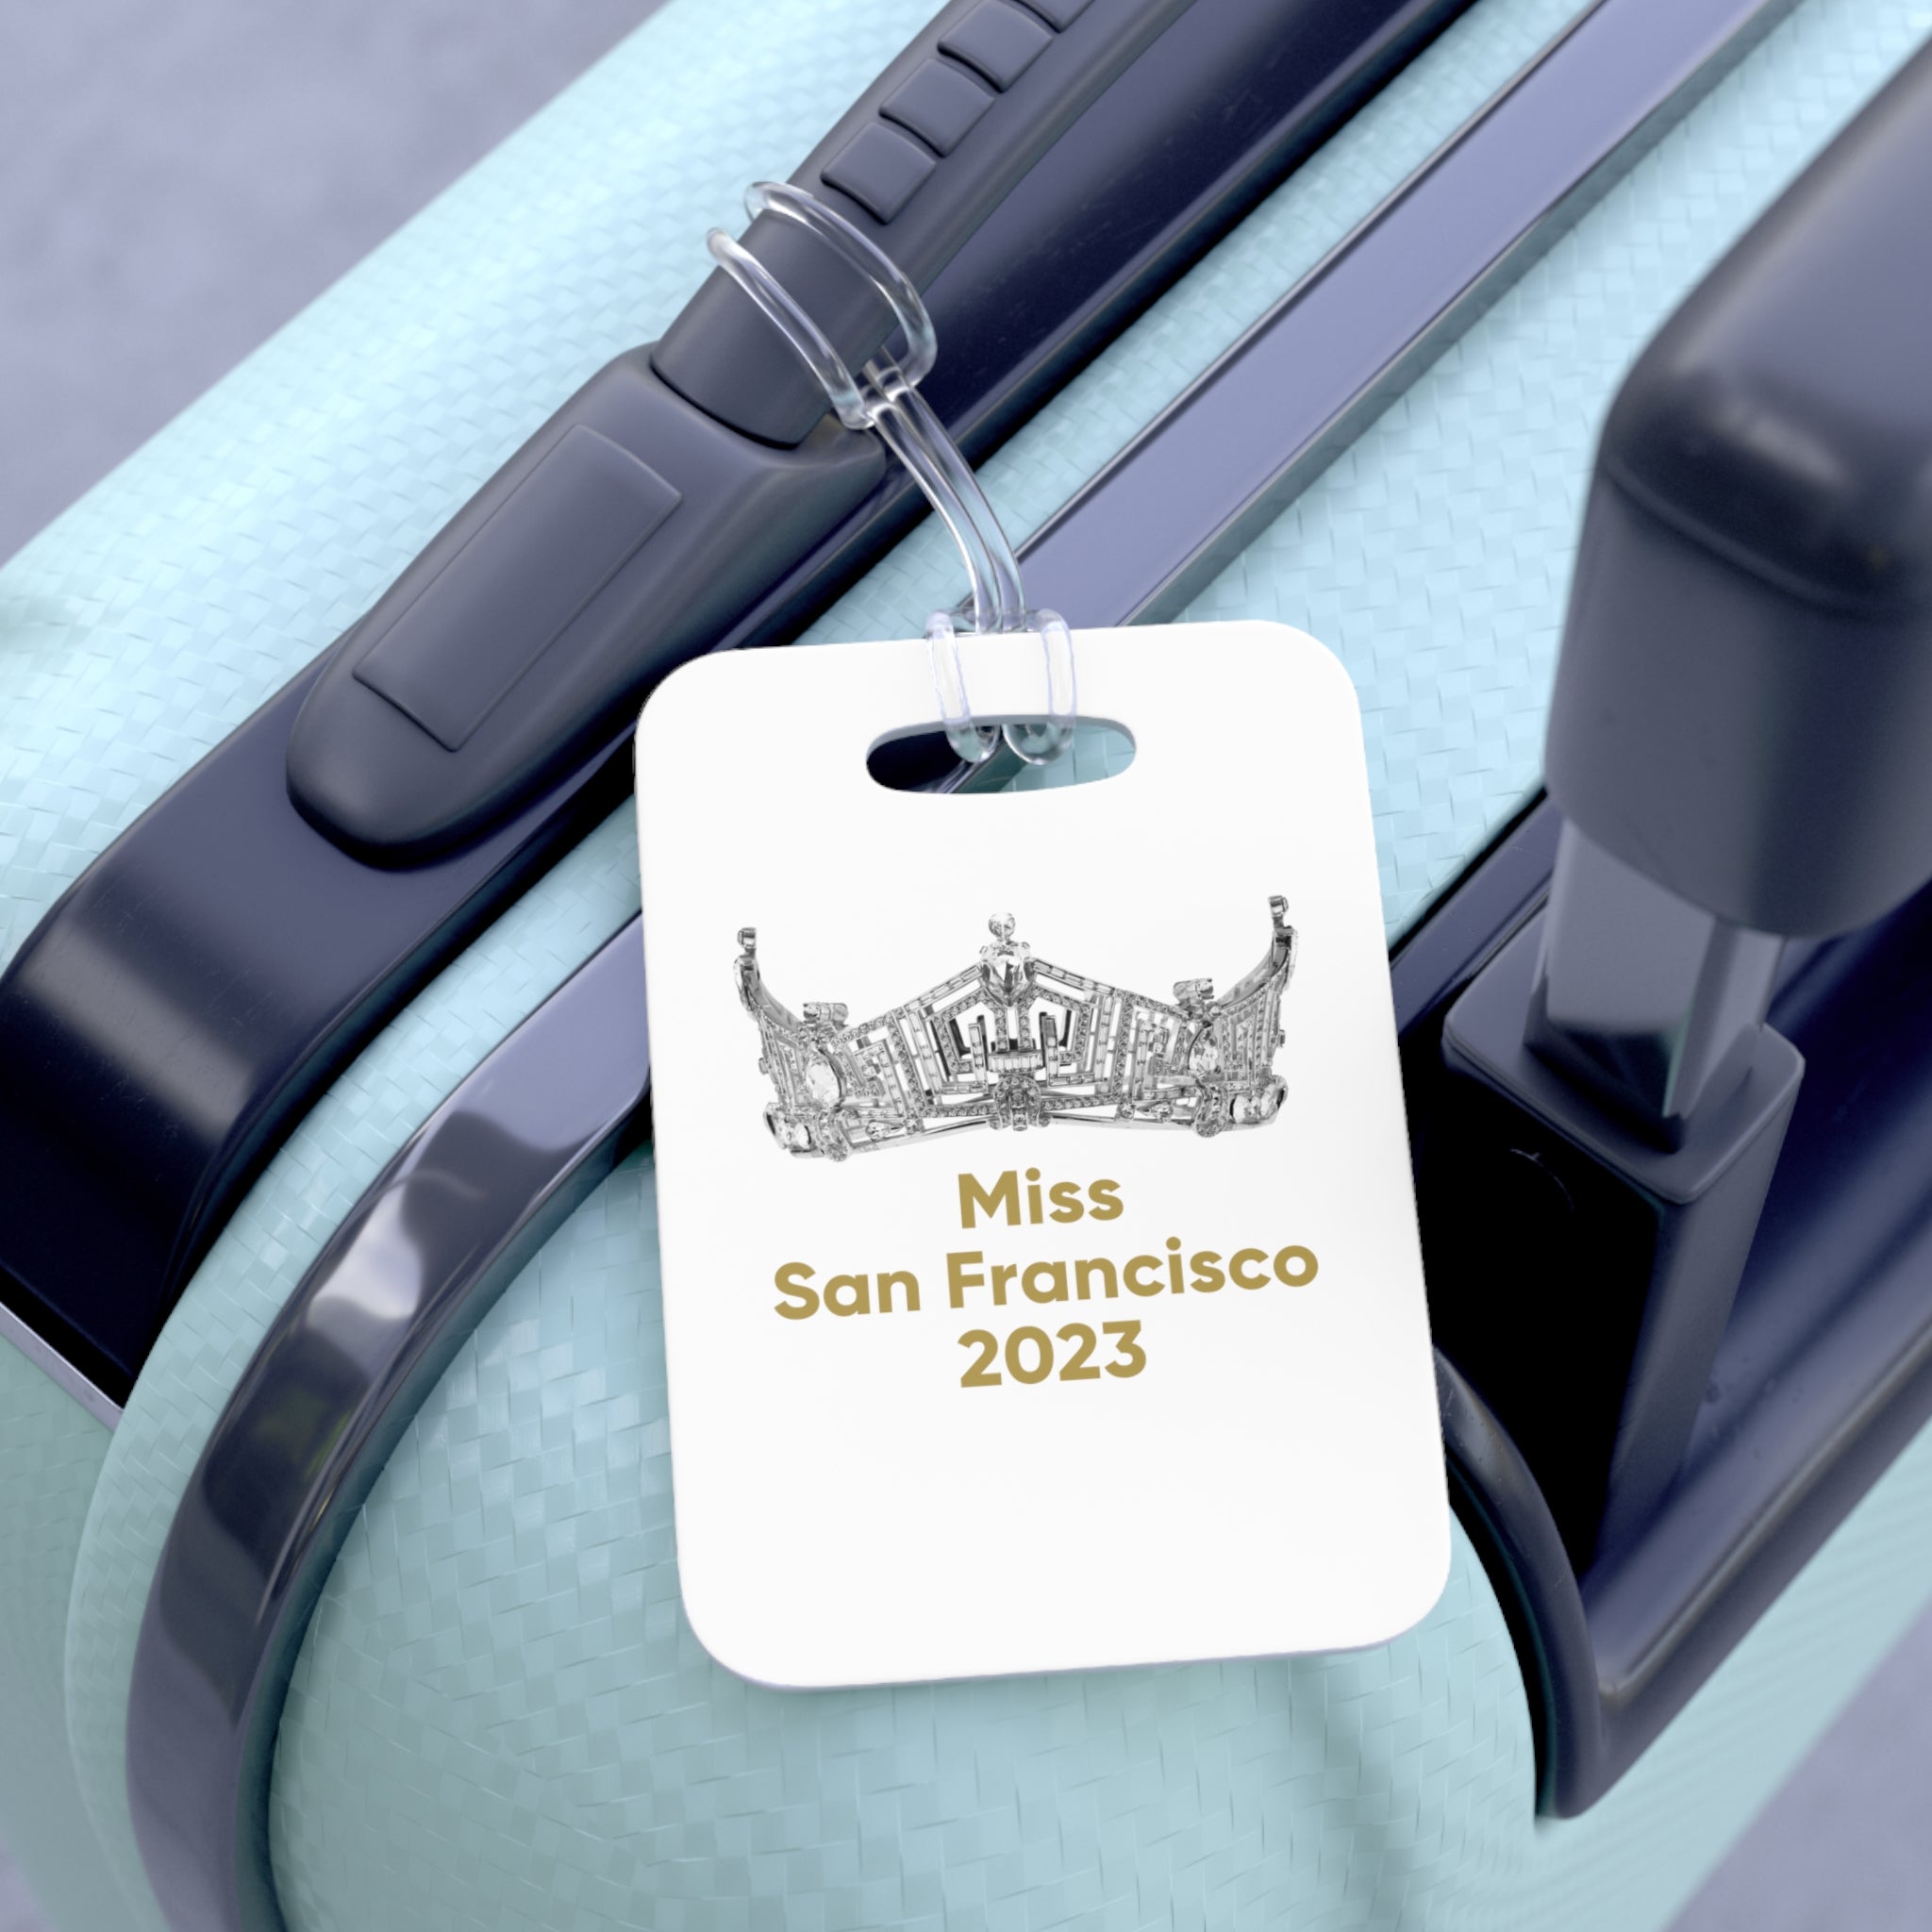 Miss America Title Luggage Bag Tag